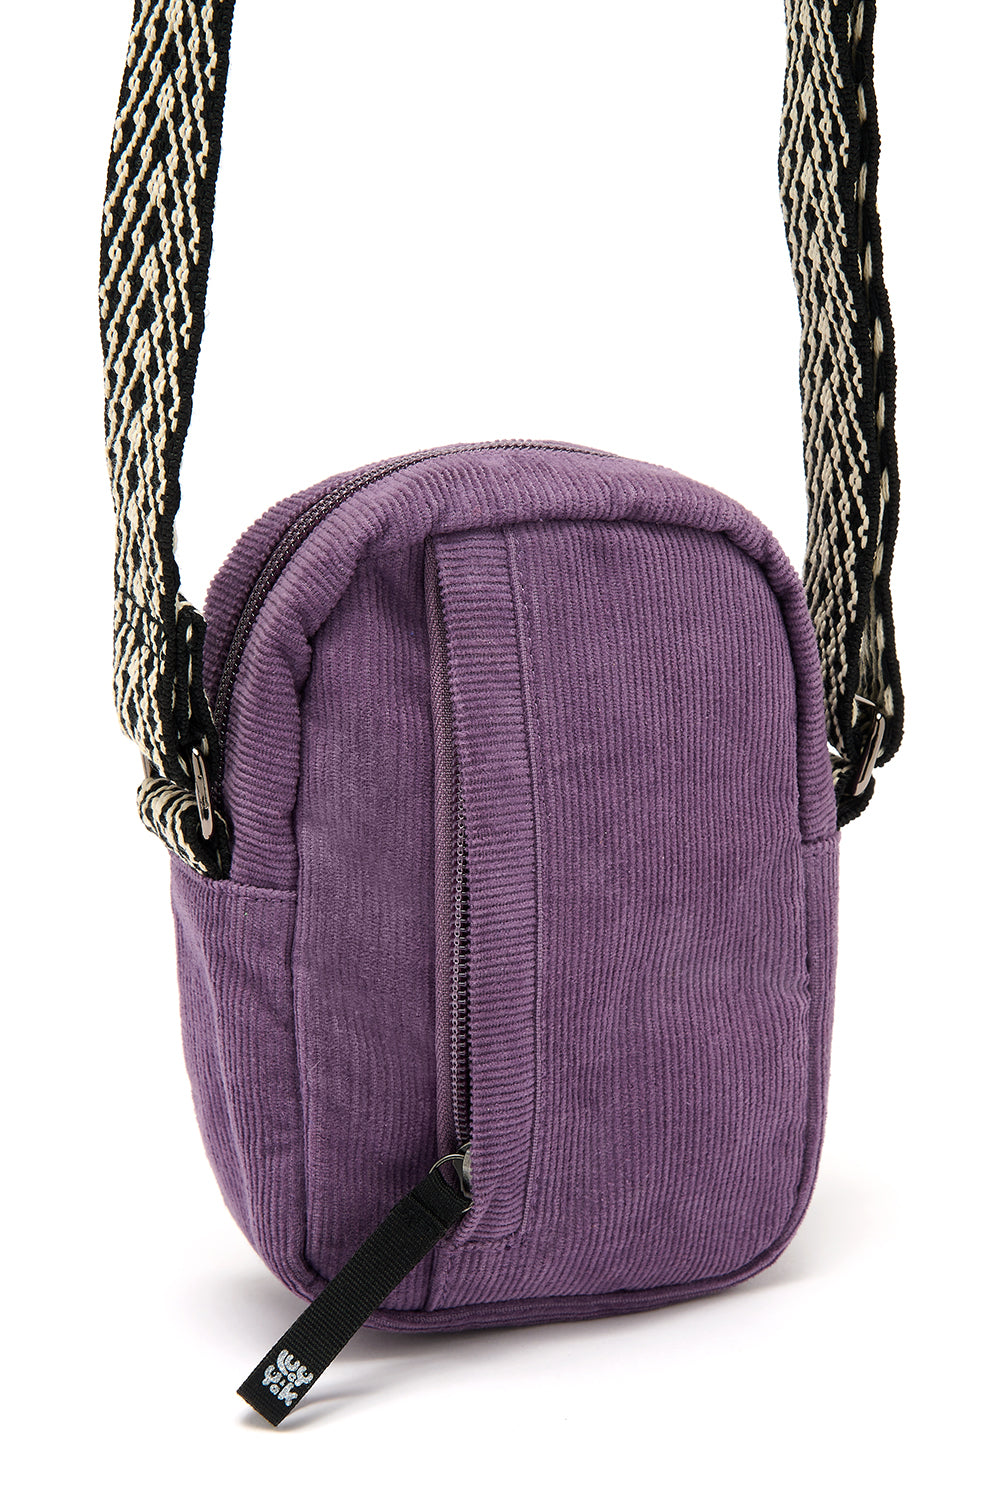 Brady Bag: ORGANIC CORDUROY - Ash Purple